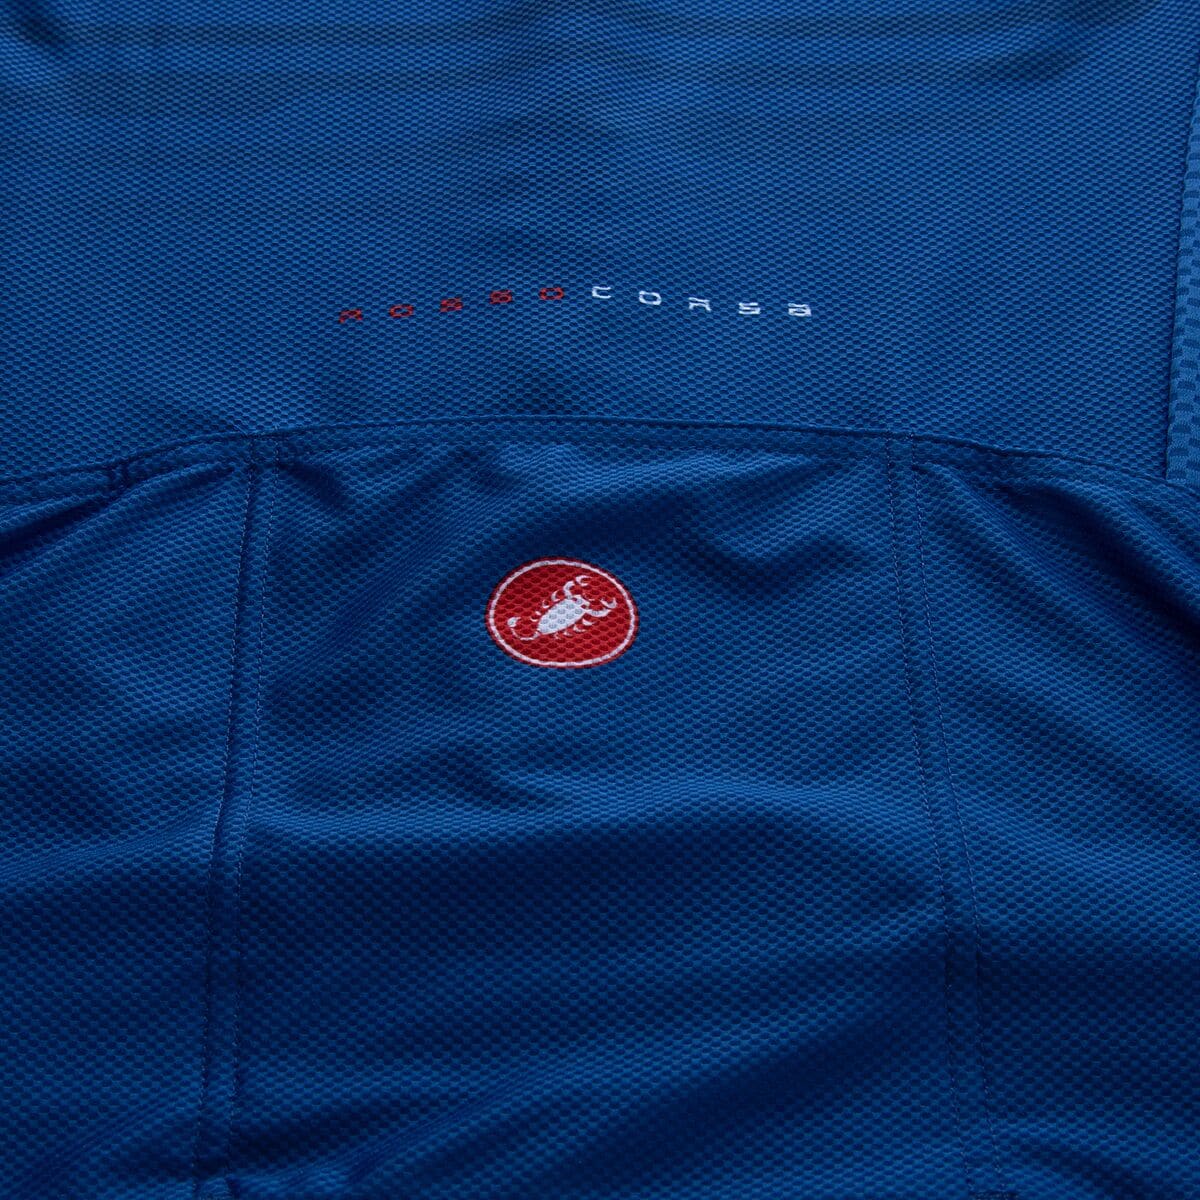 Castelli Climber's 3.0 Limited Edition Full-Zip Jersey - Men's - Men